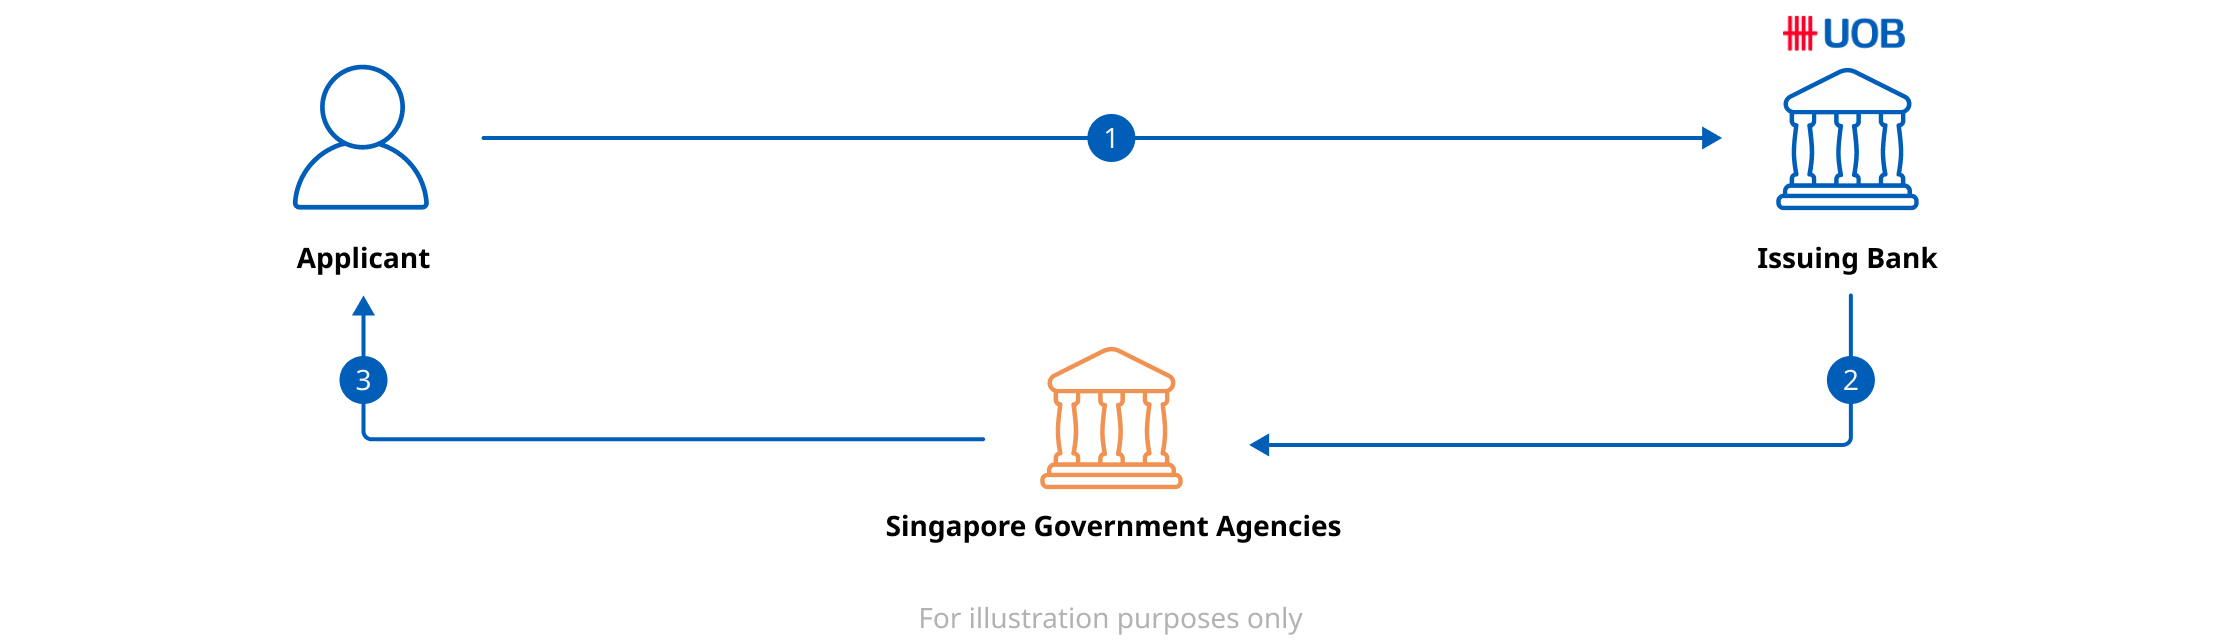 Singapore Government Agencies